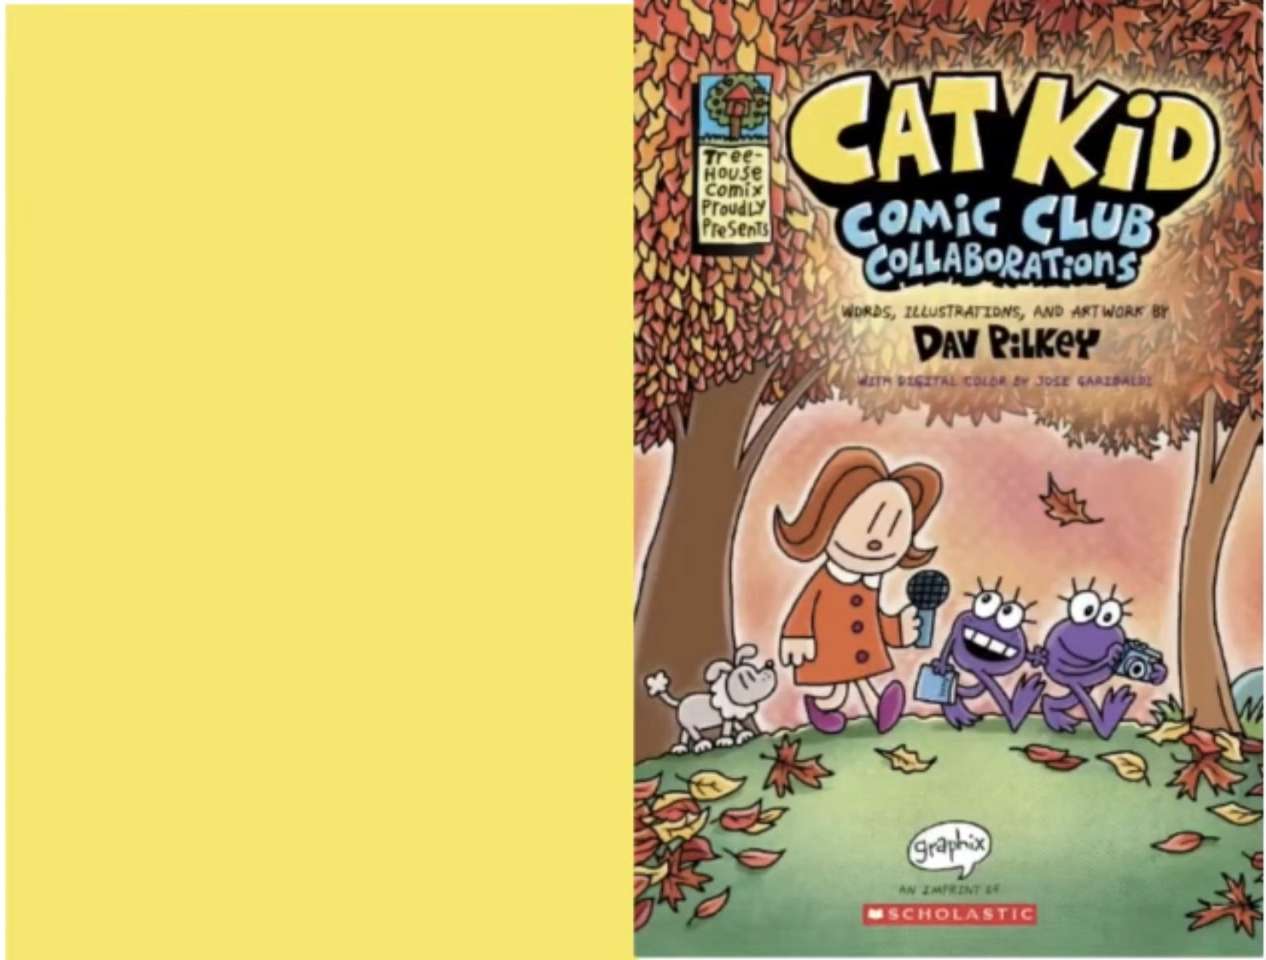 Cat kid comic club-samenwerkingen online puzzel